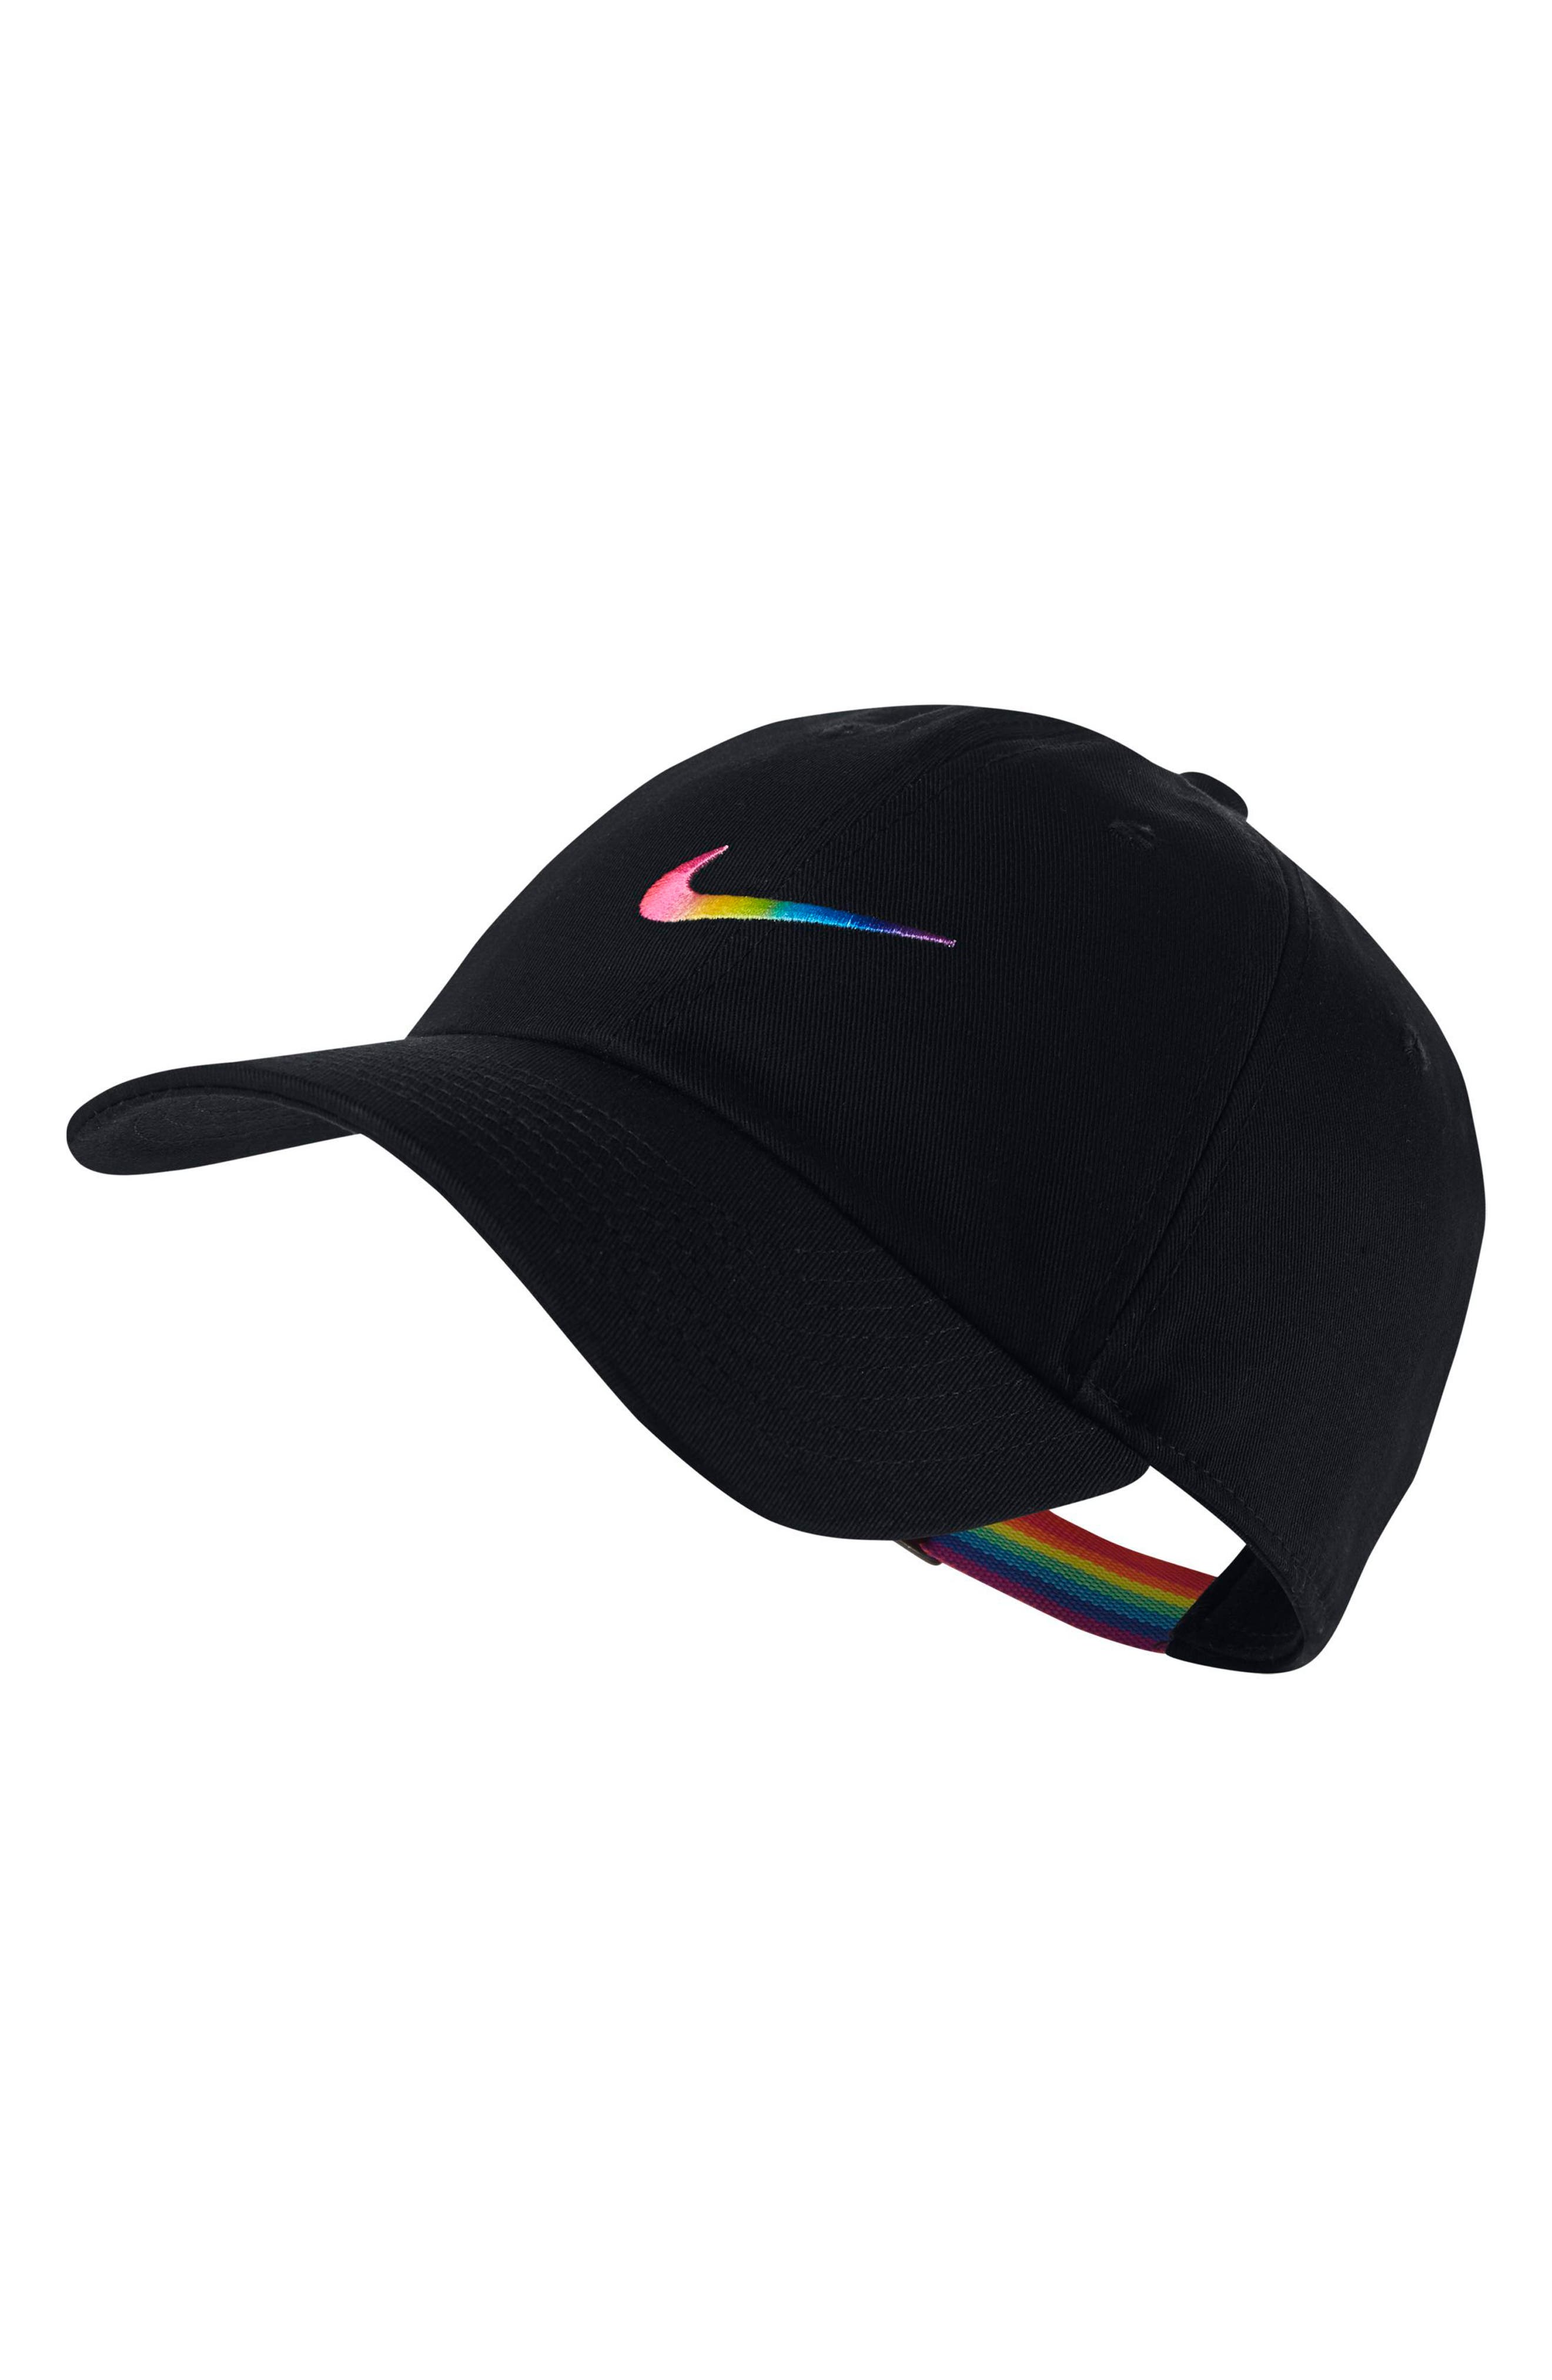 nike rainbow hat